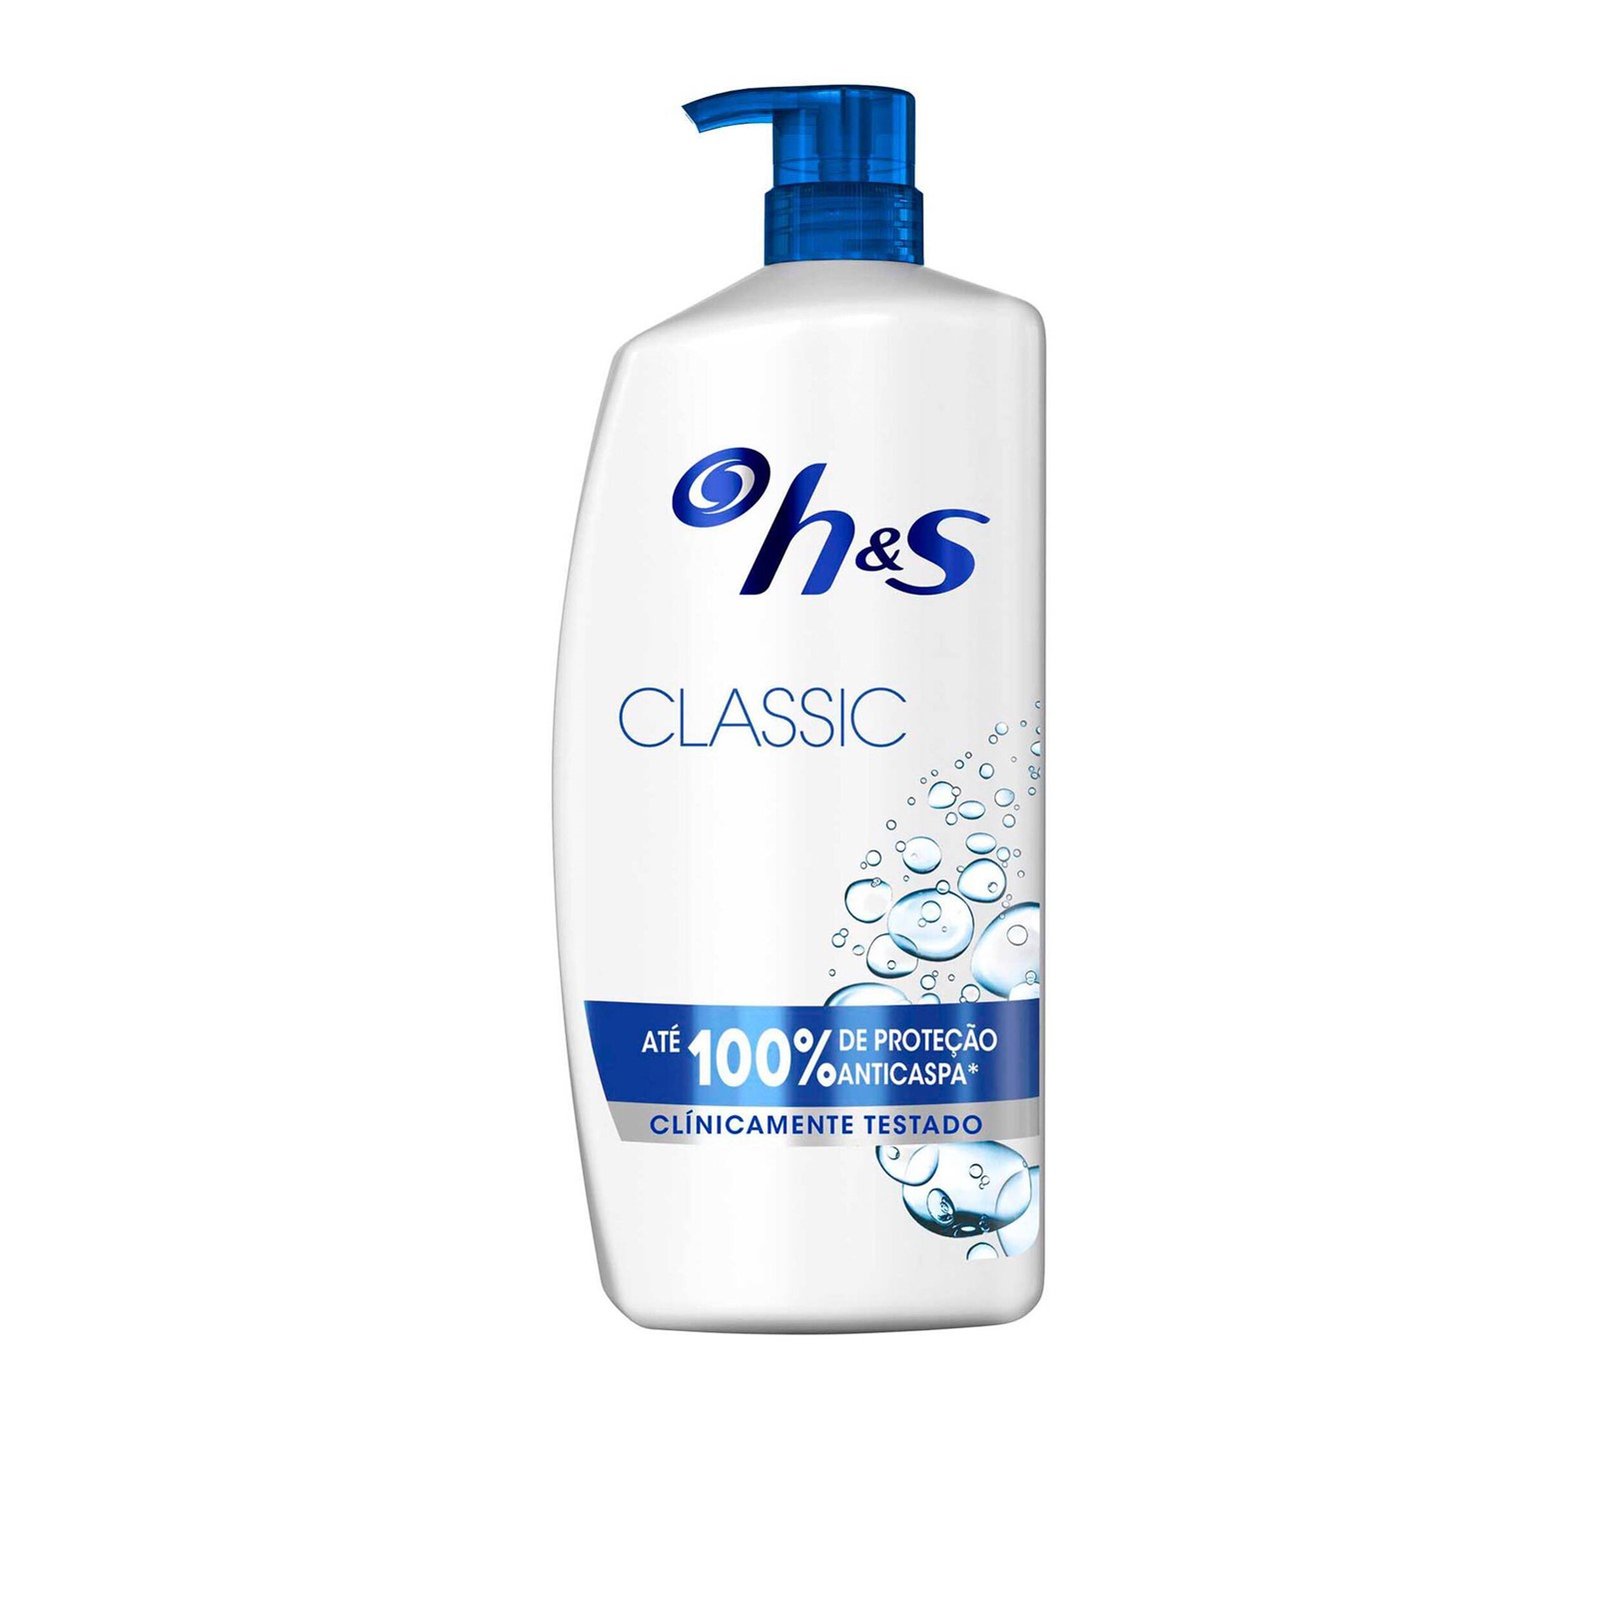 H&S Classic Clean Shampoo 1L (33.8 fl oz)